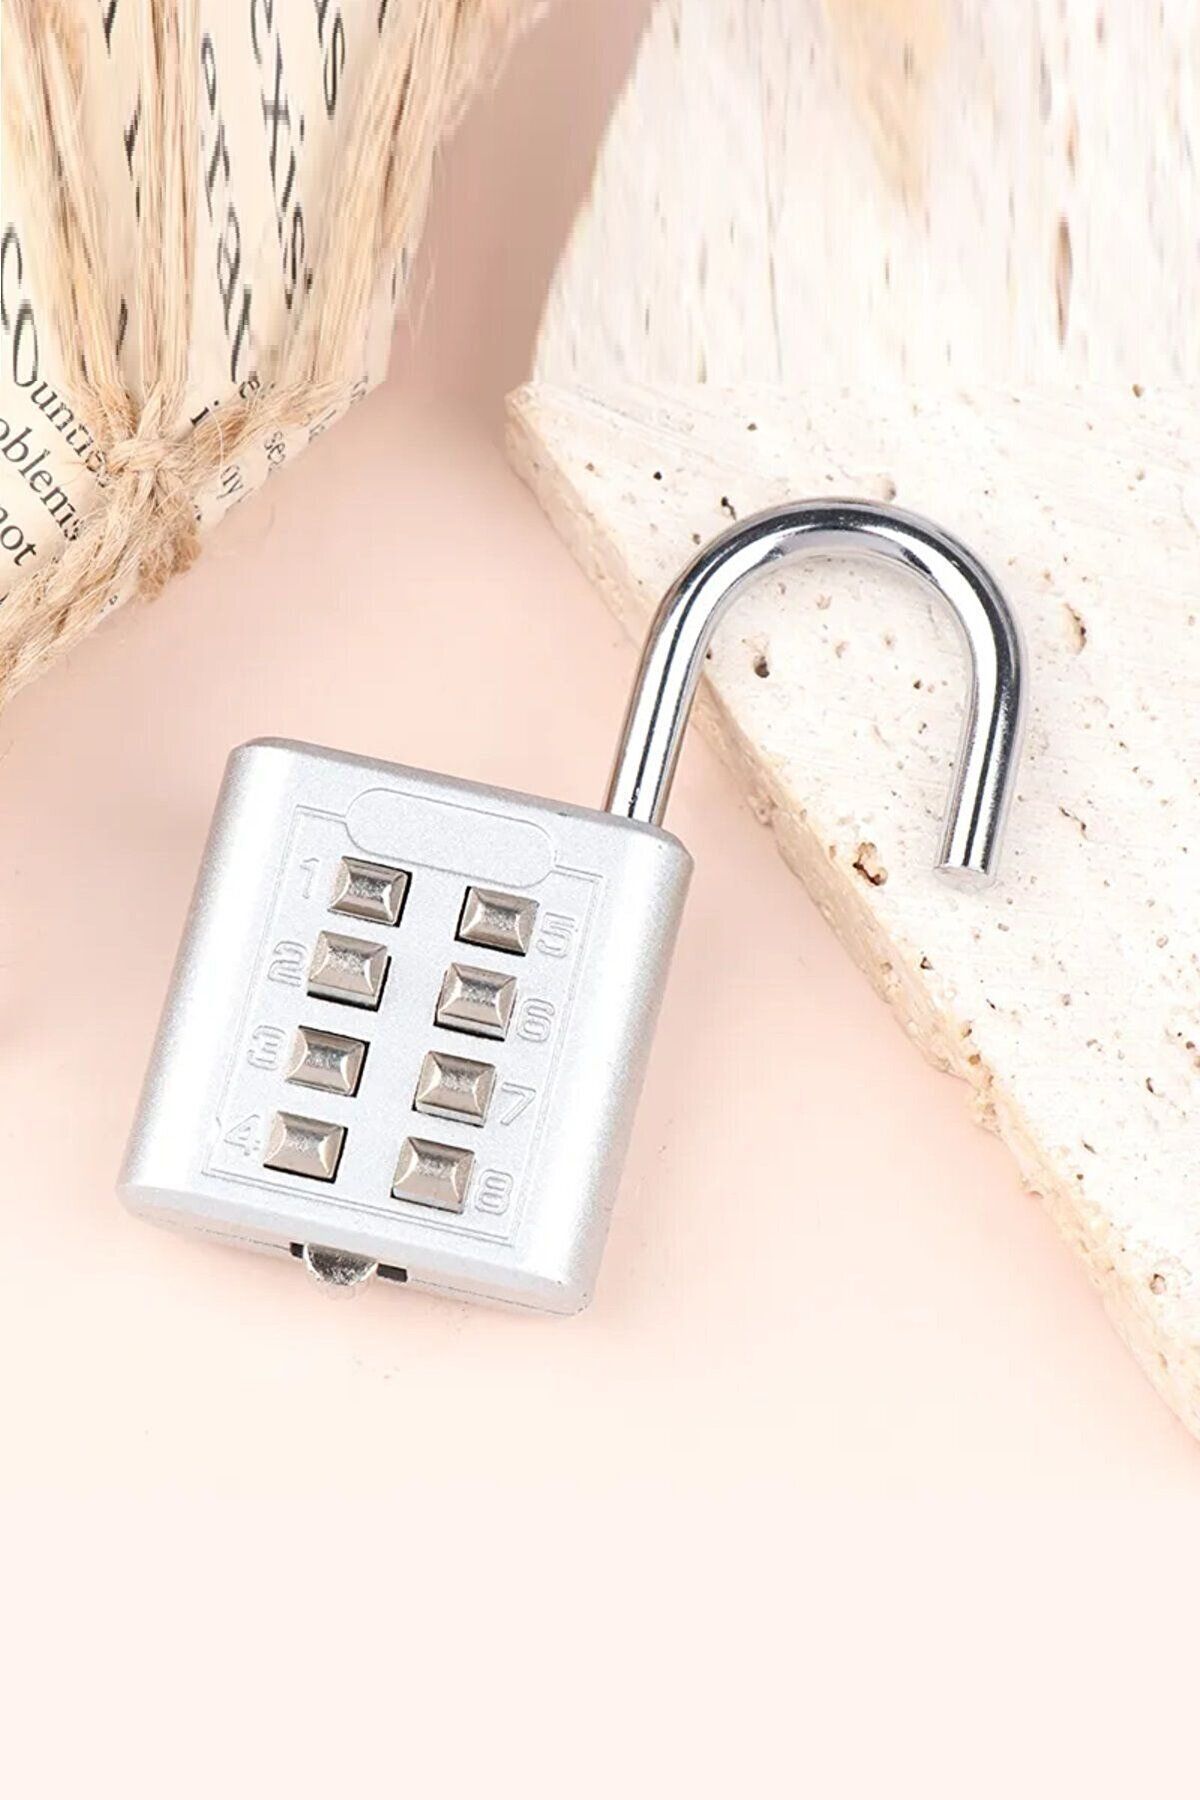 Xolo Akıllı 8 Şifreli Kilit Basmalı Şifreli Kilit Ofis Dolap Bagaj Valiz Çanta Güvenlik Kilit XLK412